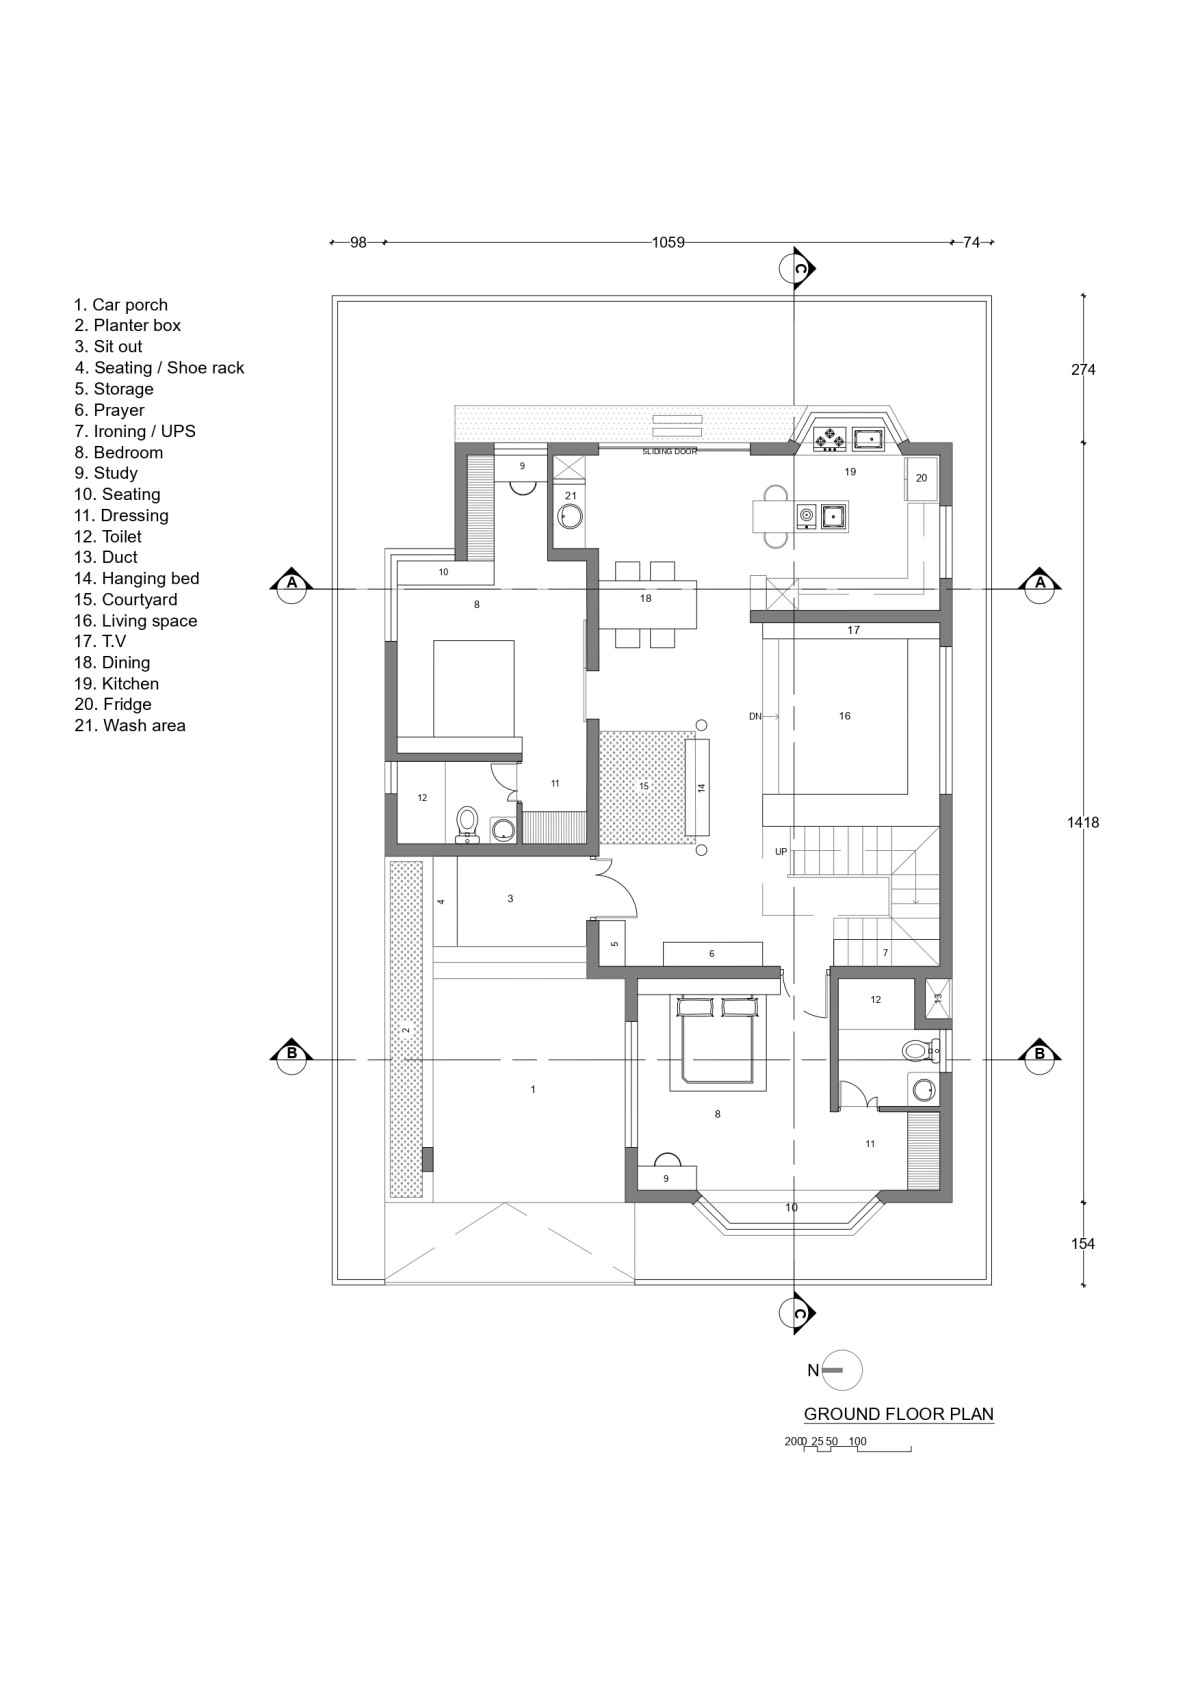 Ground floor plan of Krishna by Attic Lab